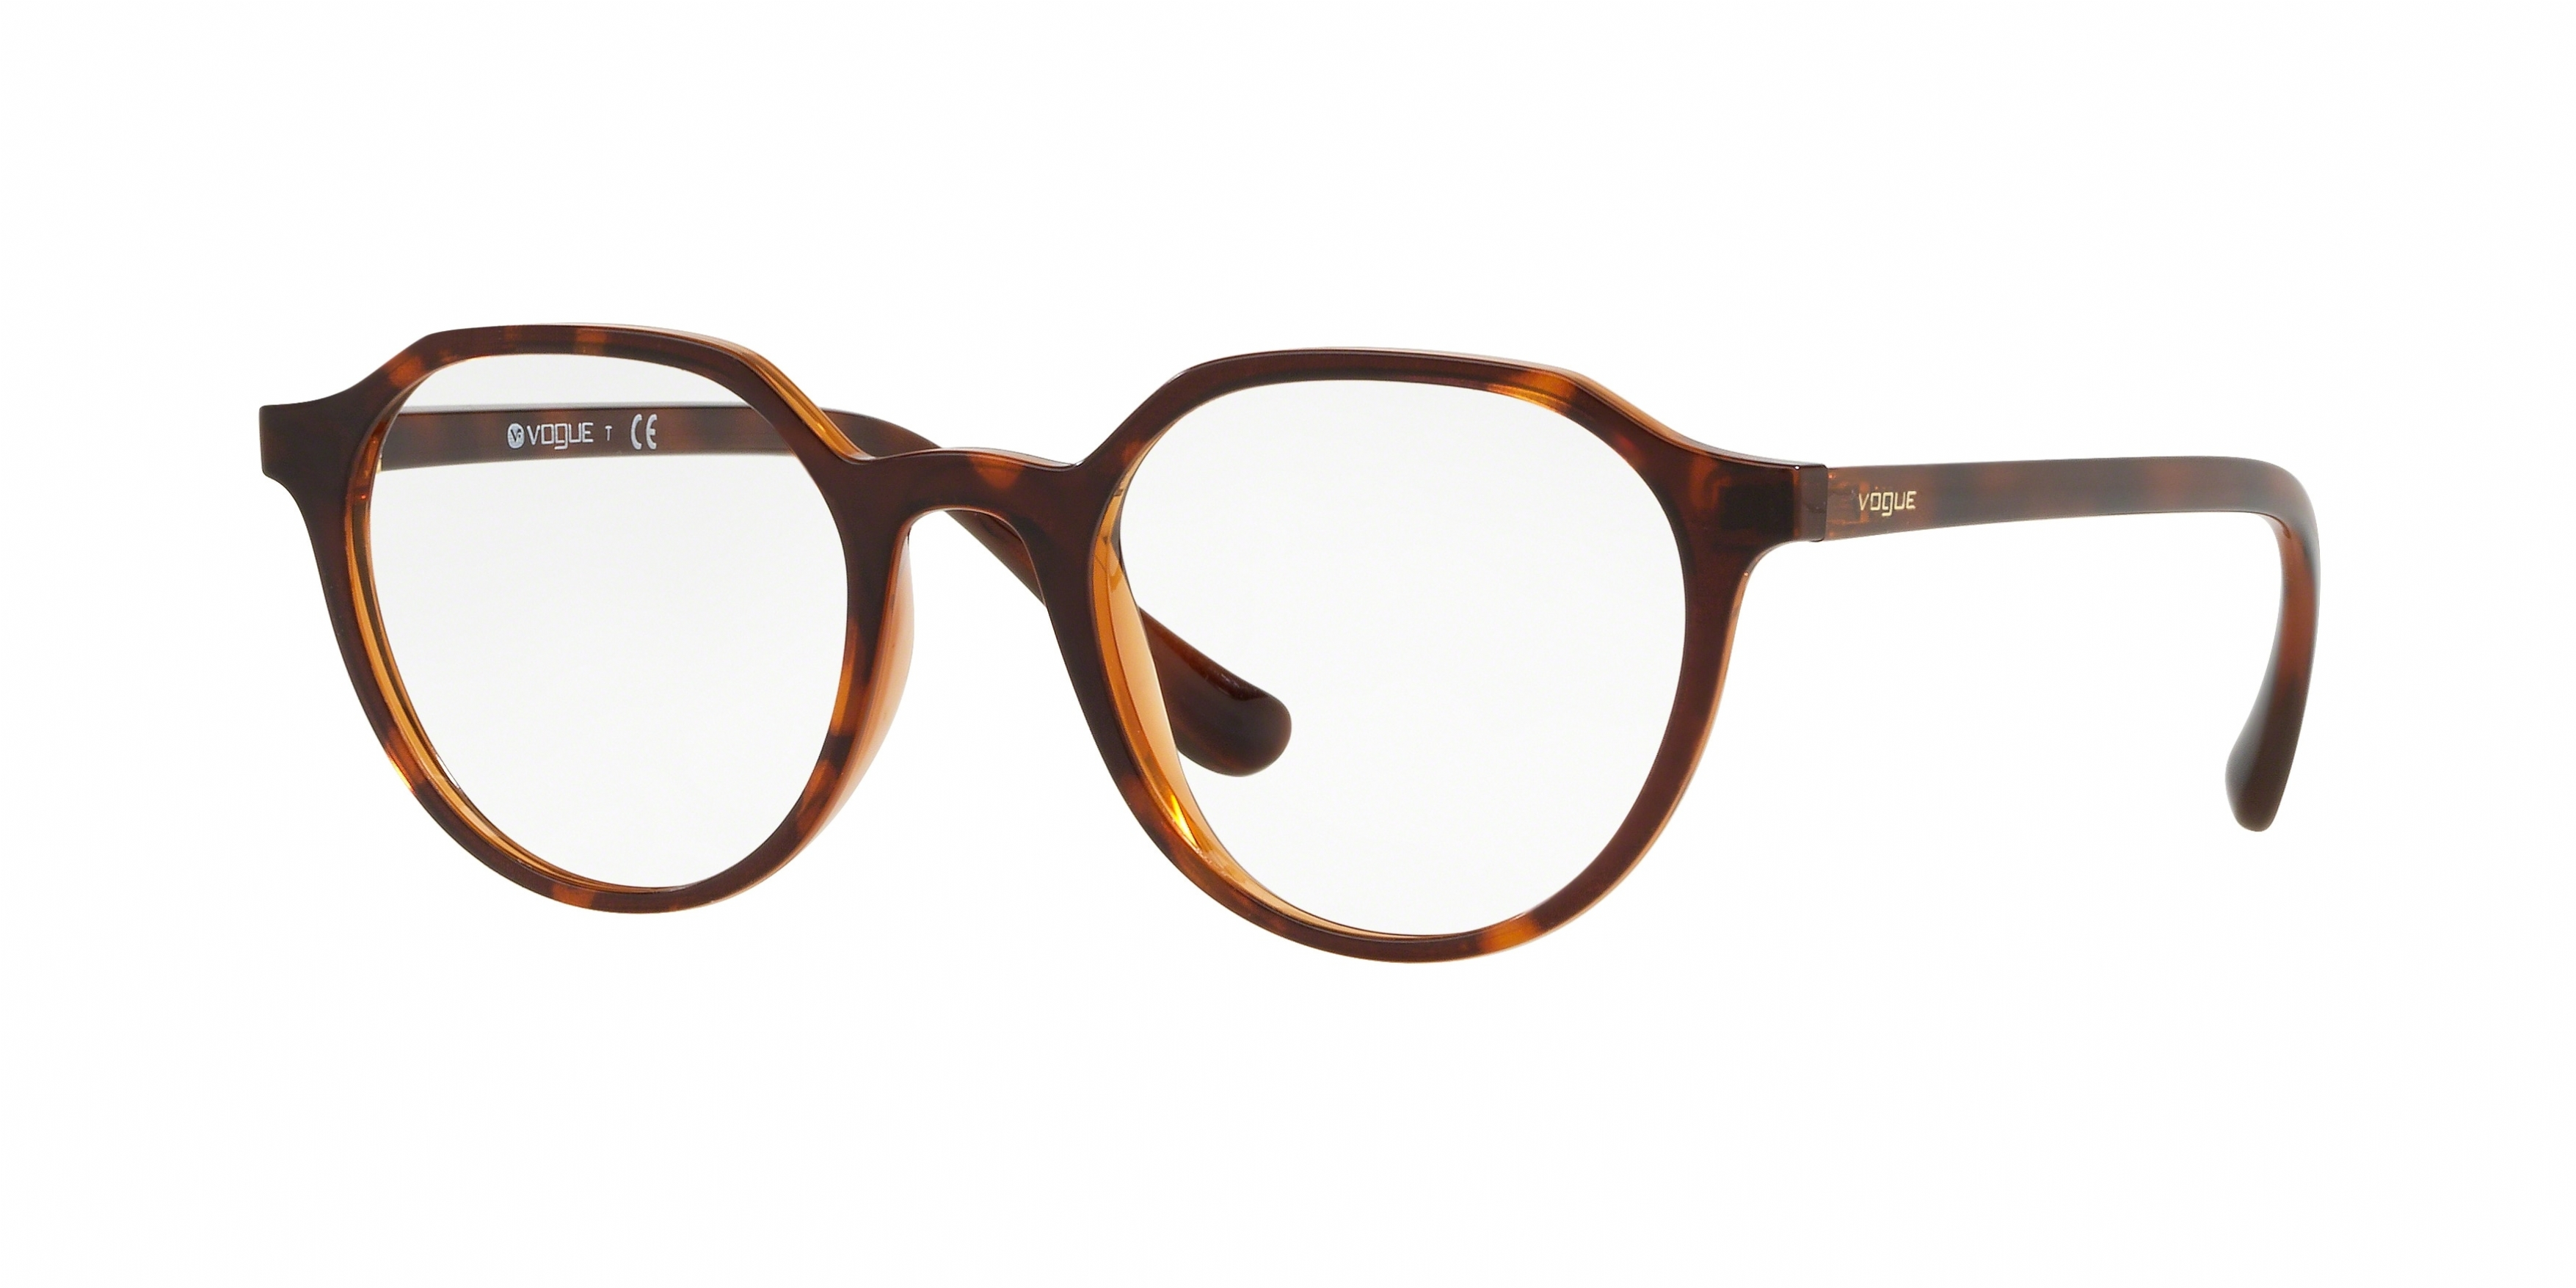 Buy Vogue Eyeglasses directly from OpticsFast.com